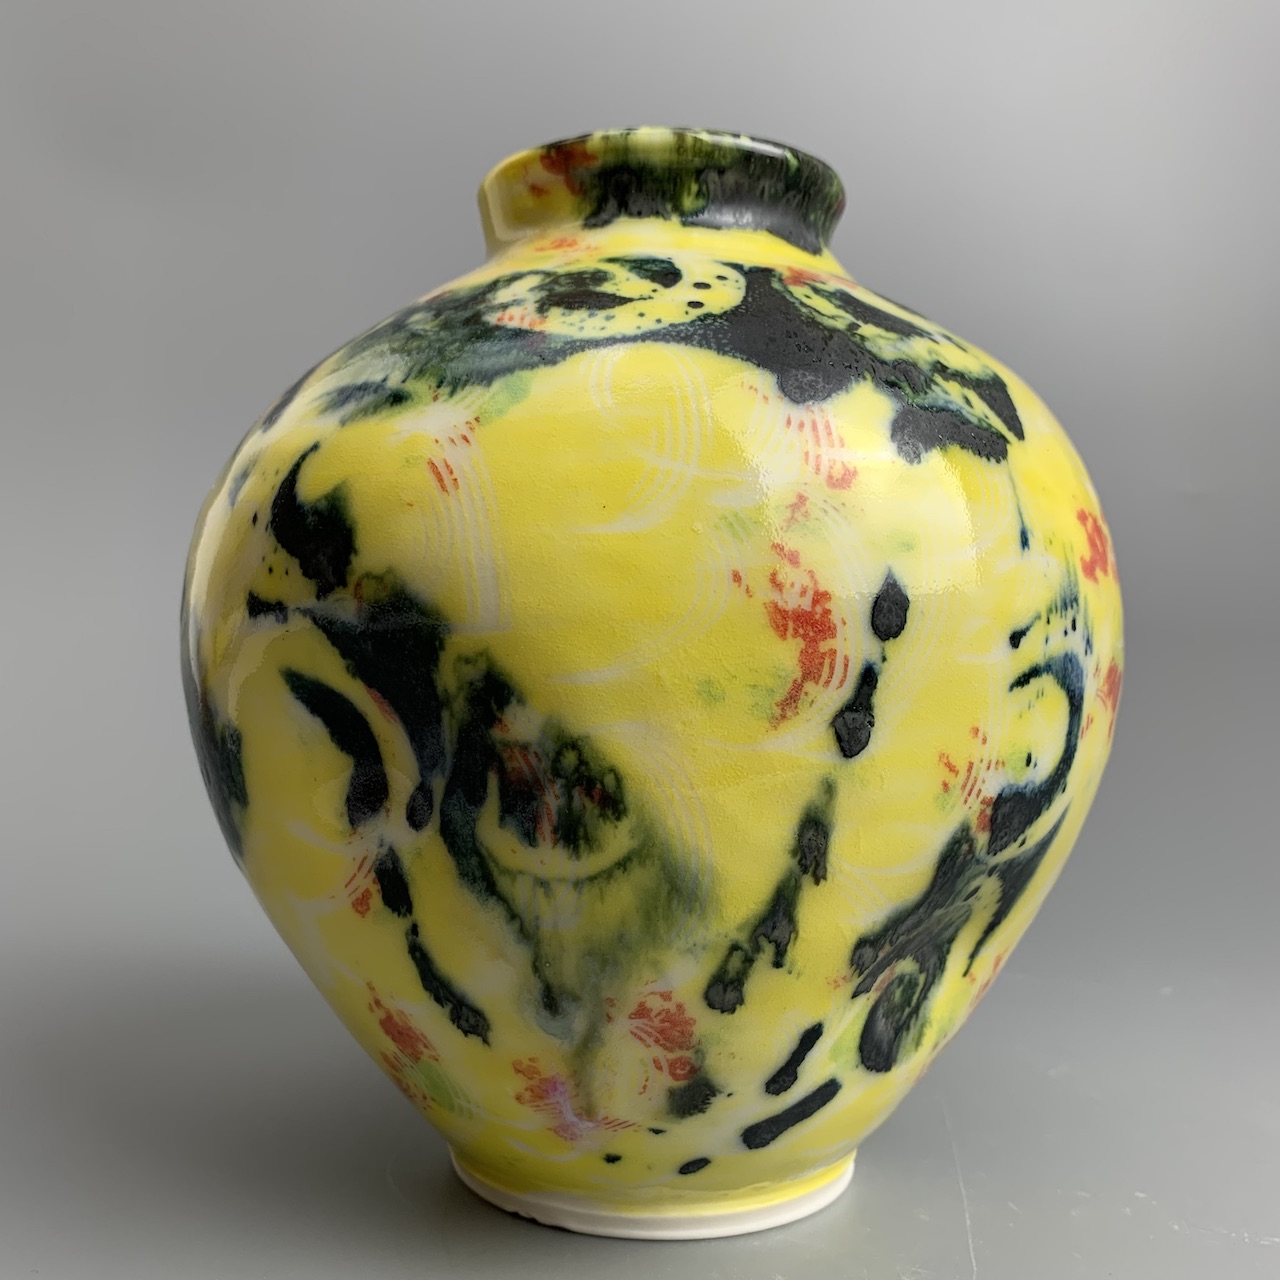 Yellows Medium Vase